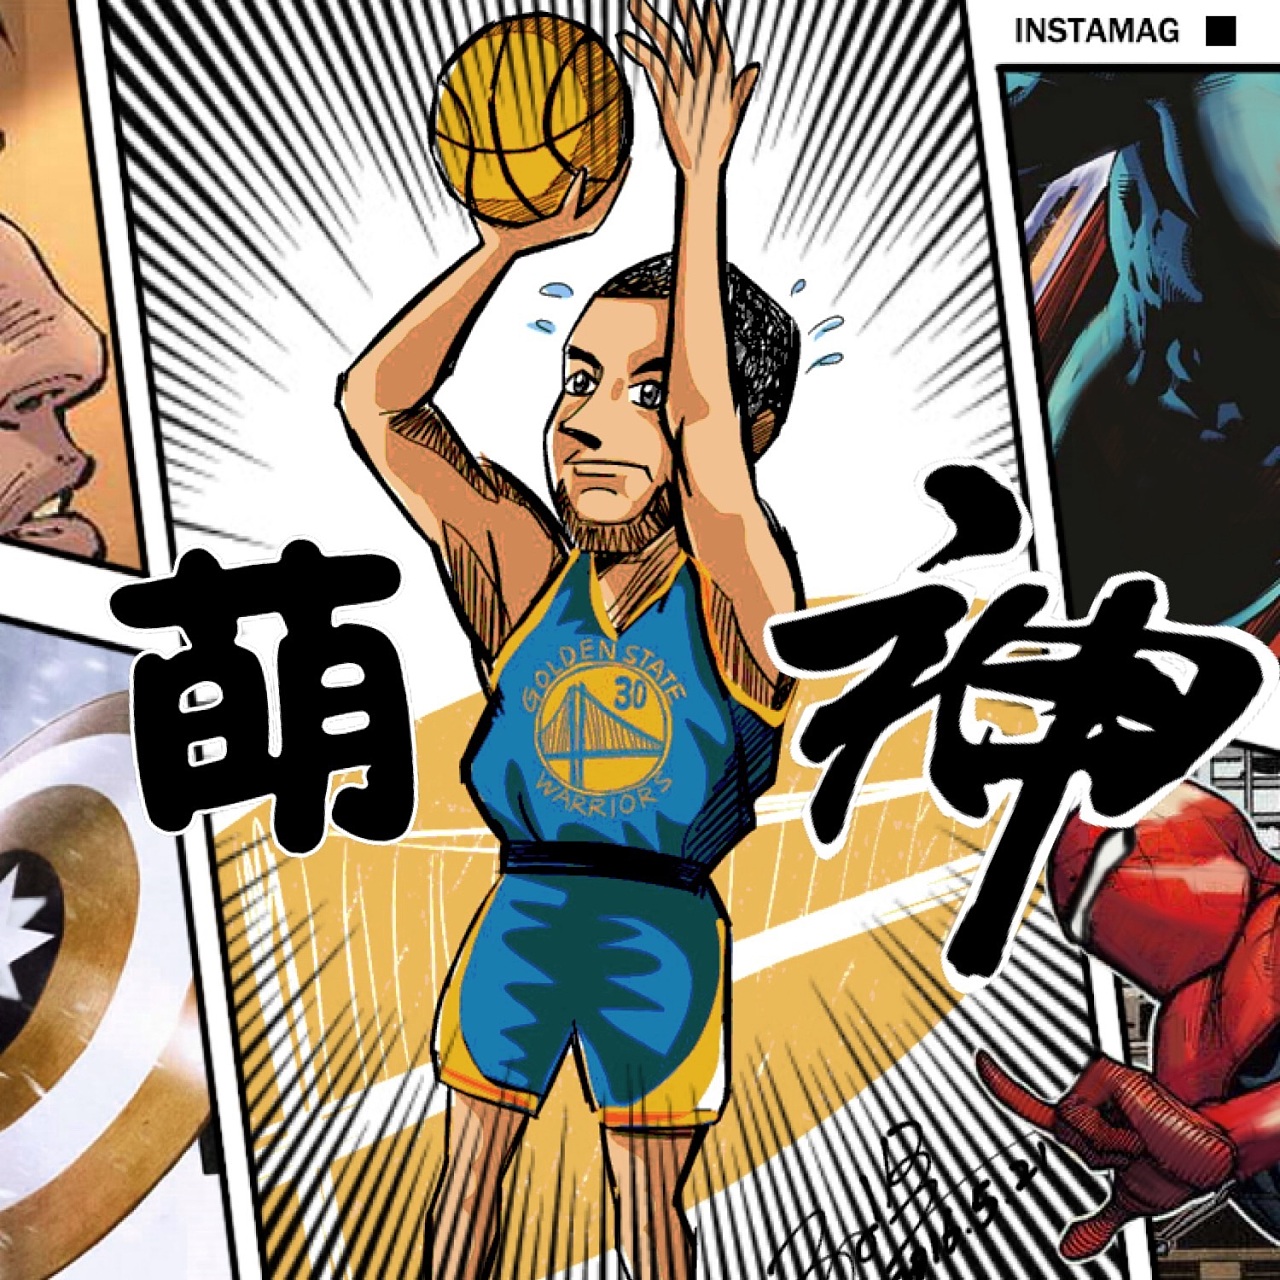 NBA卡通球星设计图__海报设计_广告设计_设计图库_昵图网nipic.com